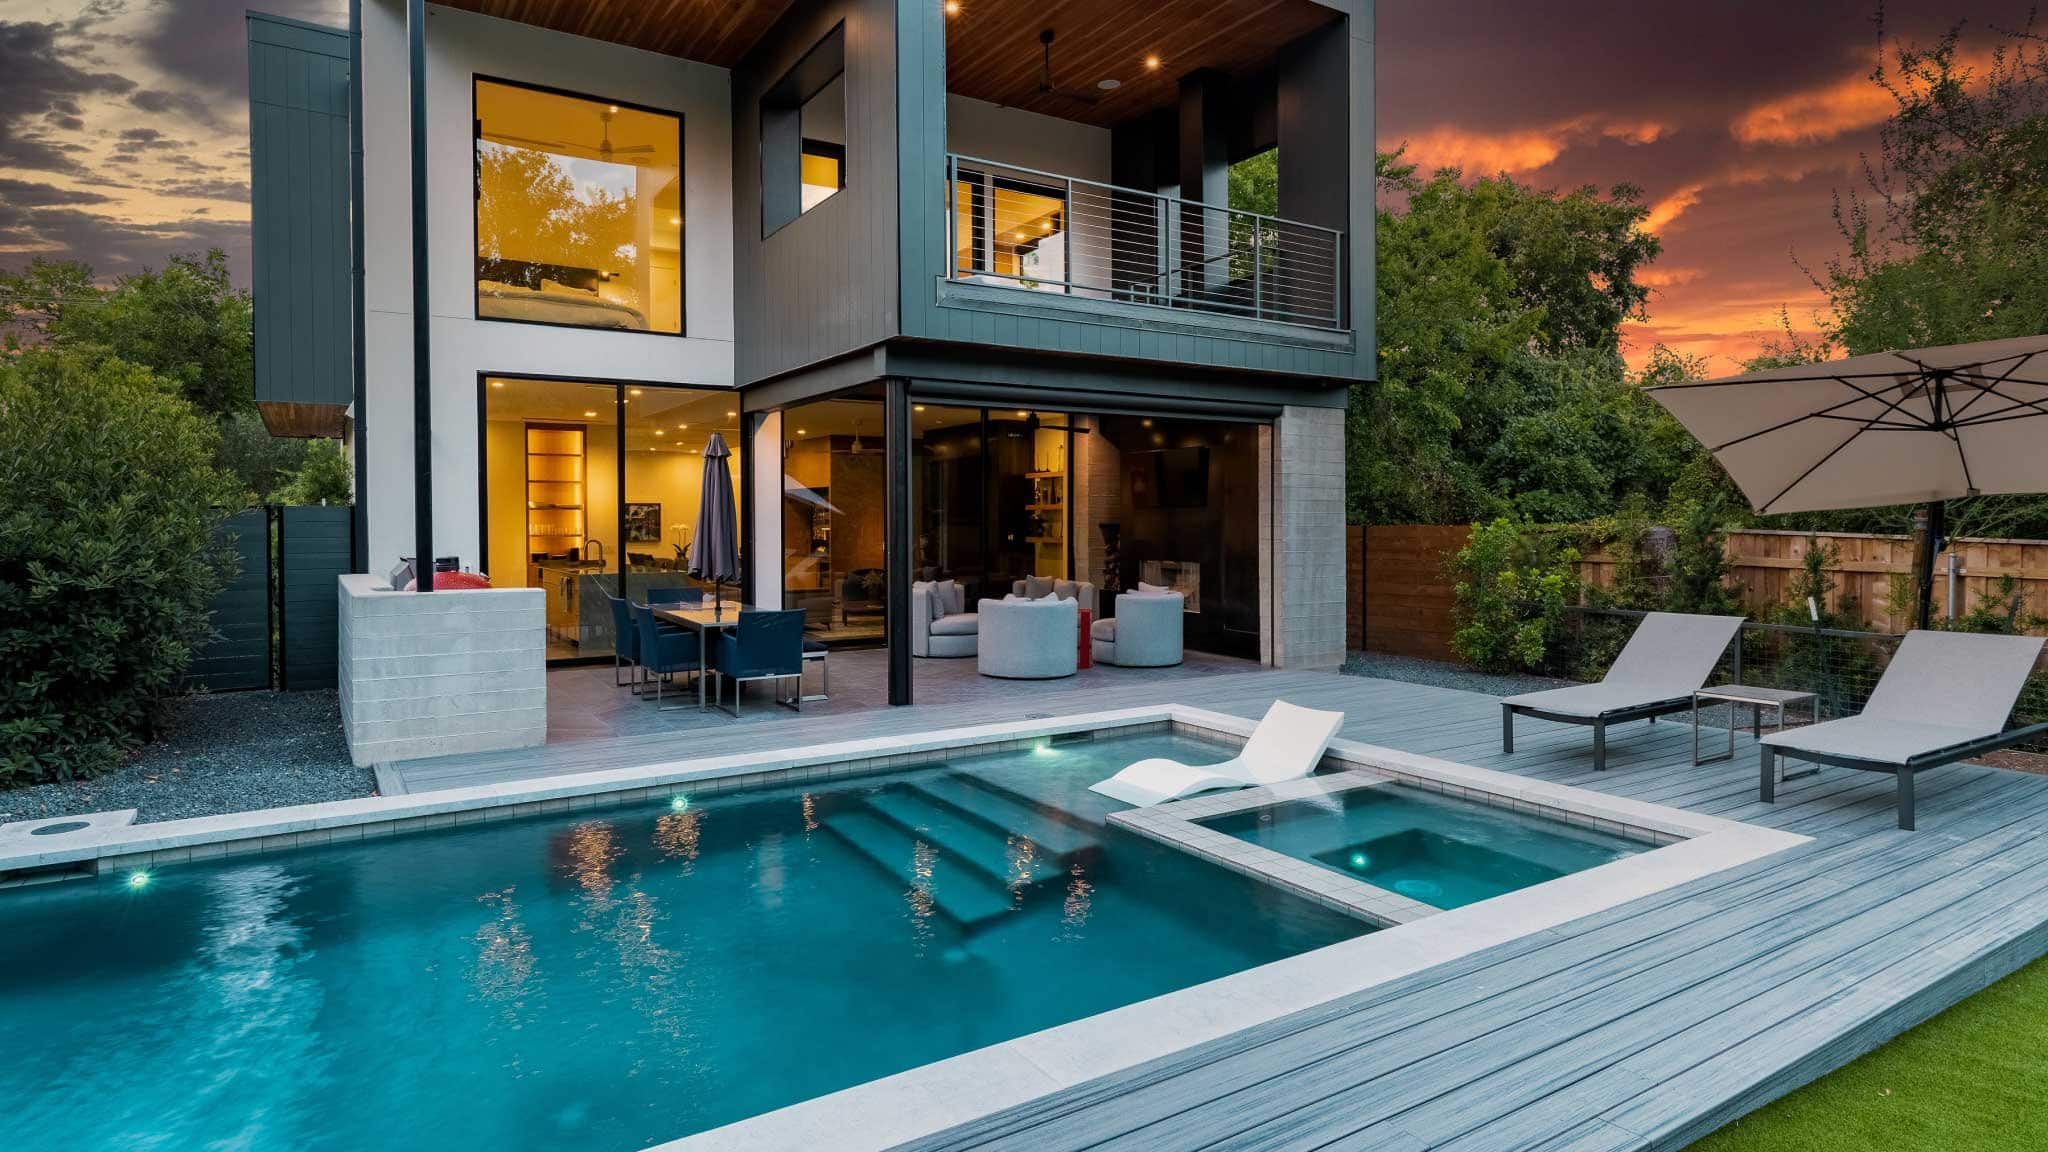 Modern home and backyard with pool and lounge area